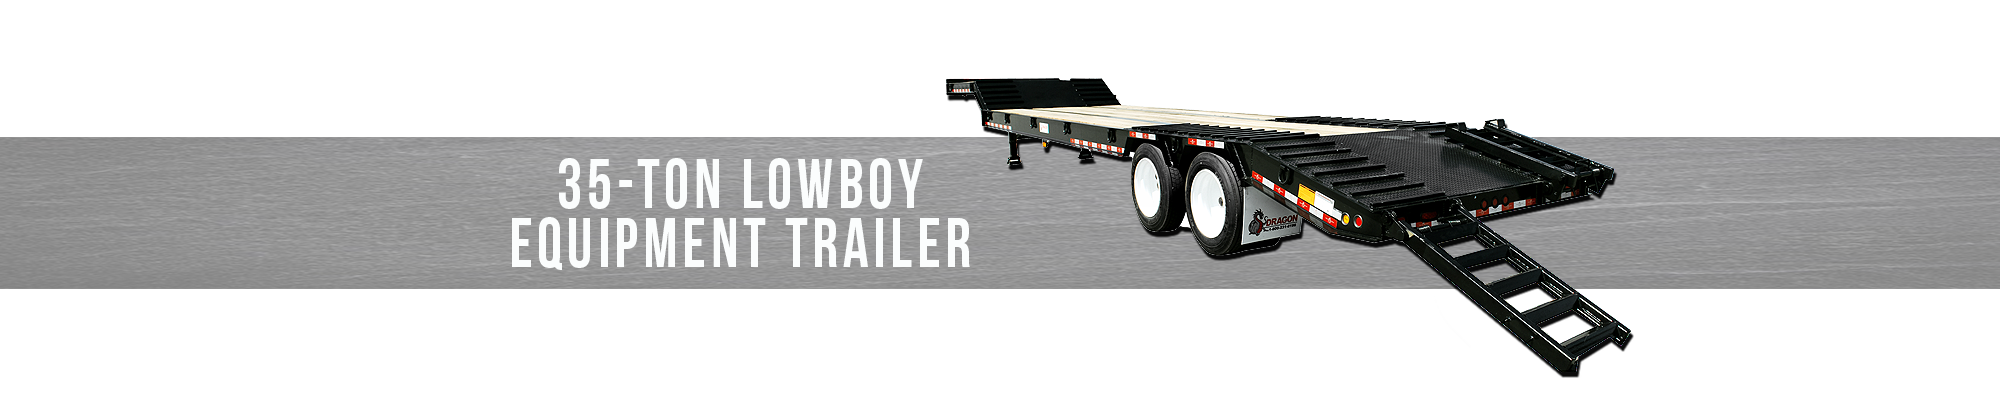 35-Ton Lowboy Equipment Trailer